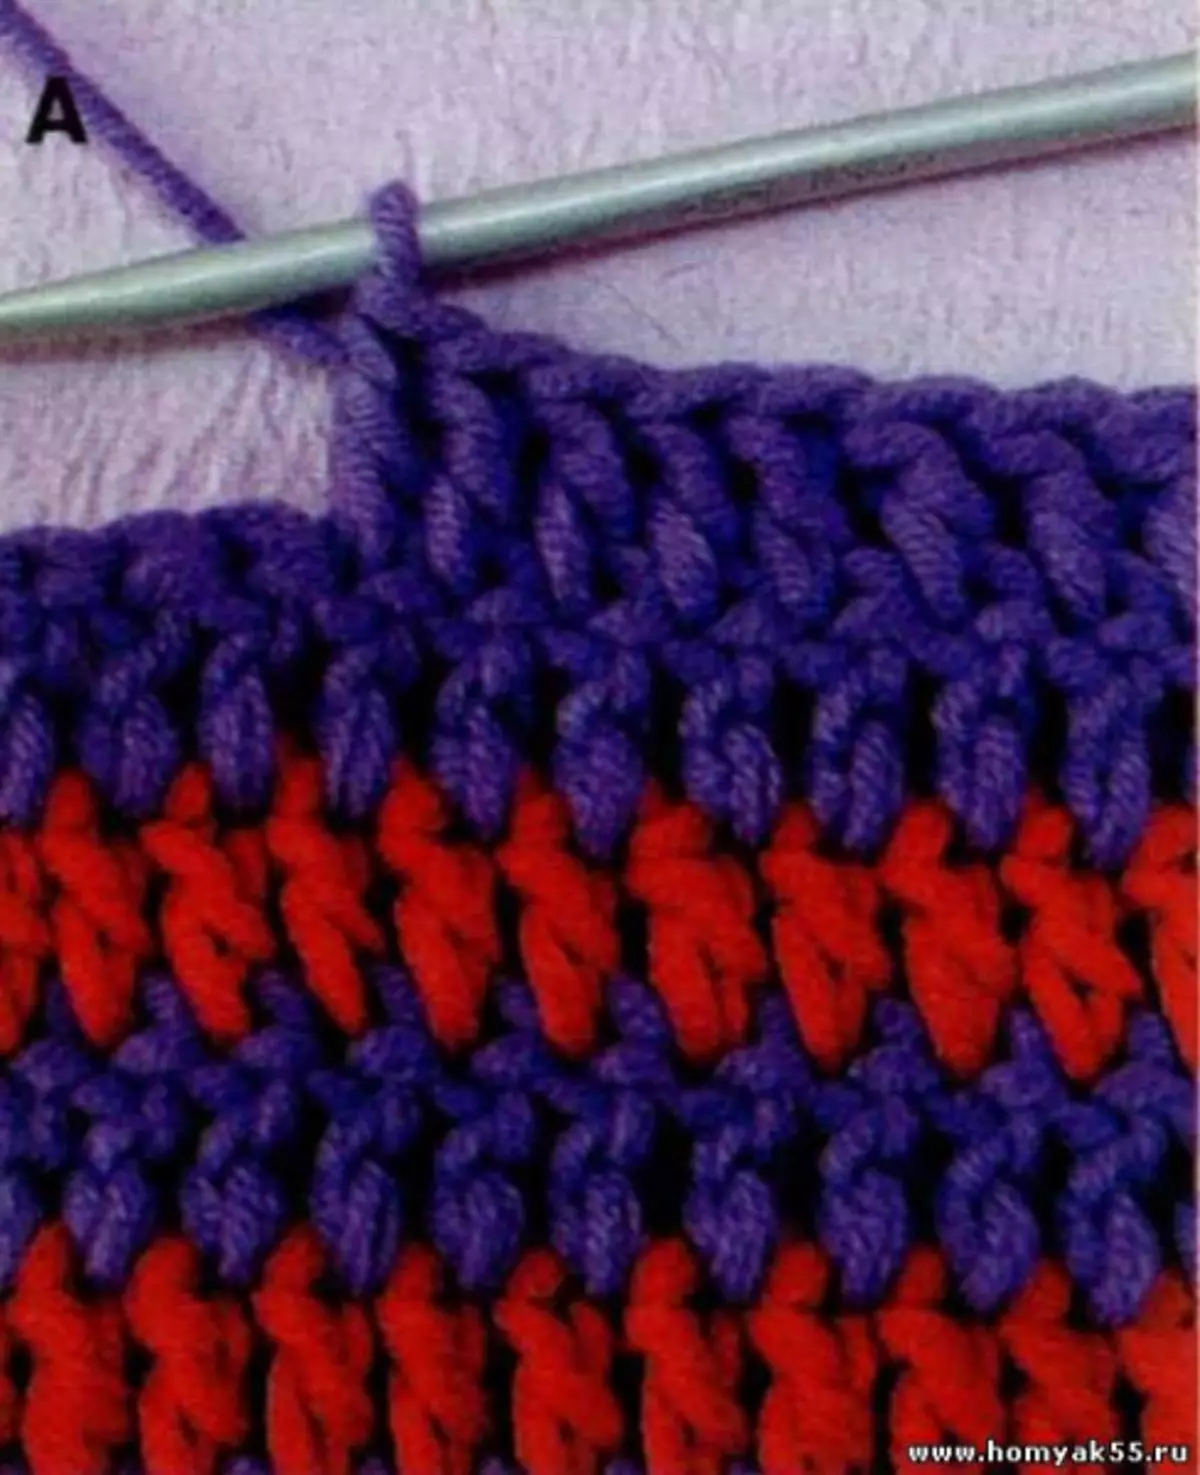 Crochet mittites барои кӯдакон: Master Master бо акс ва видео